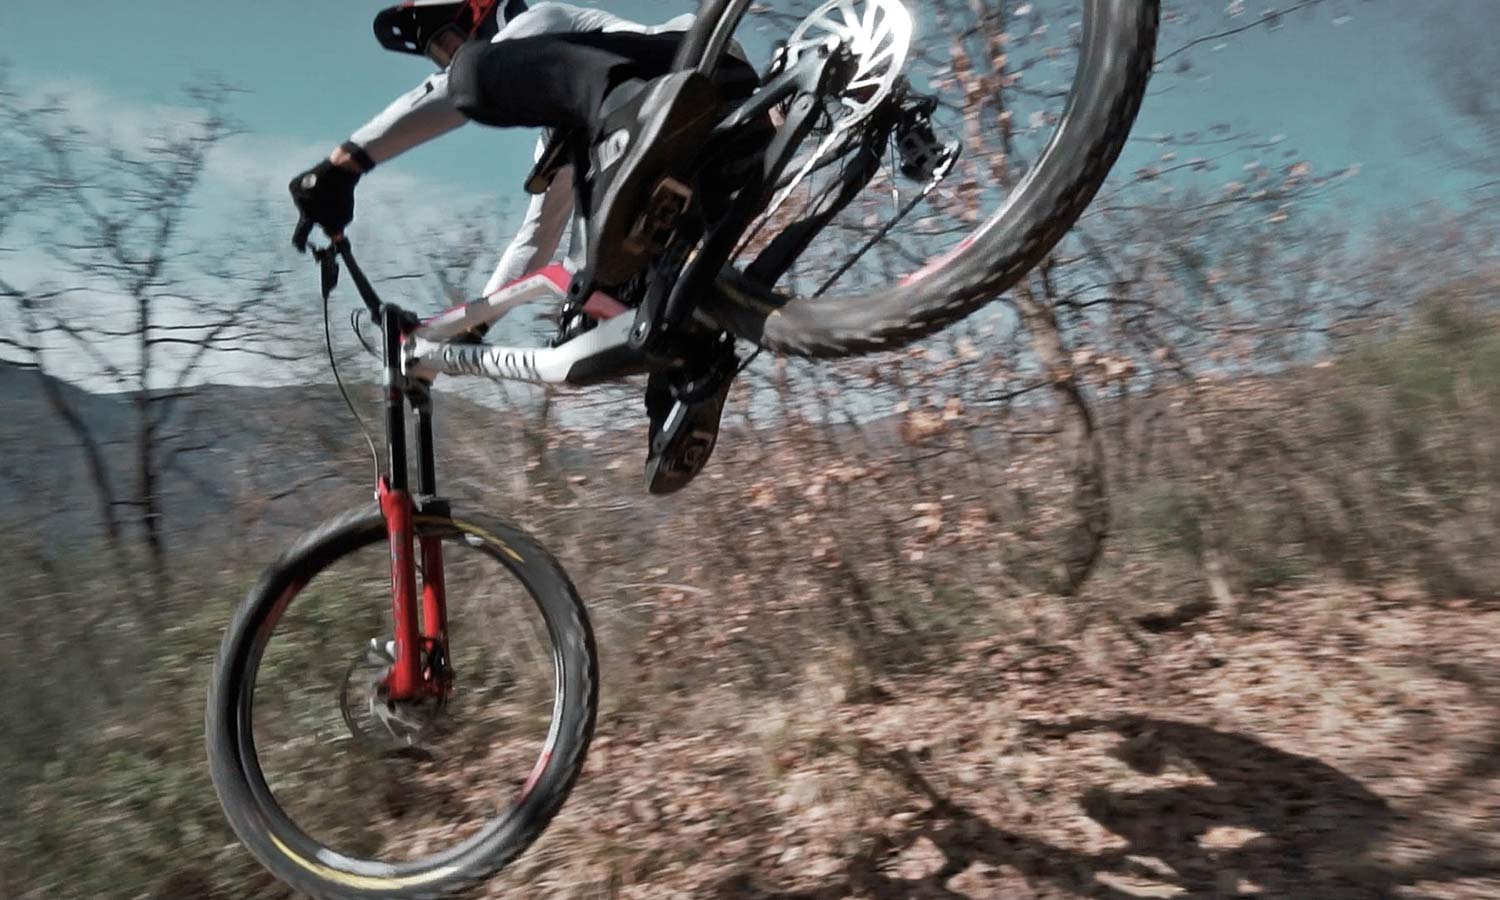 Pirelli Scorpion Gravity Racing prototype EWS, DH-ready mountain bike tires, photos by Julien Pradas, riding